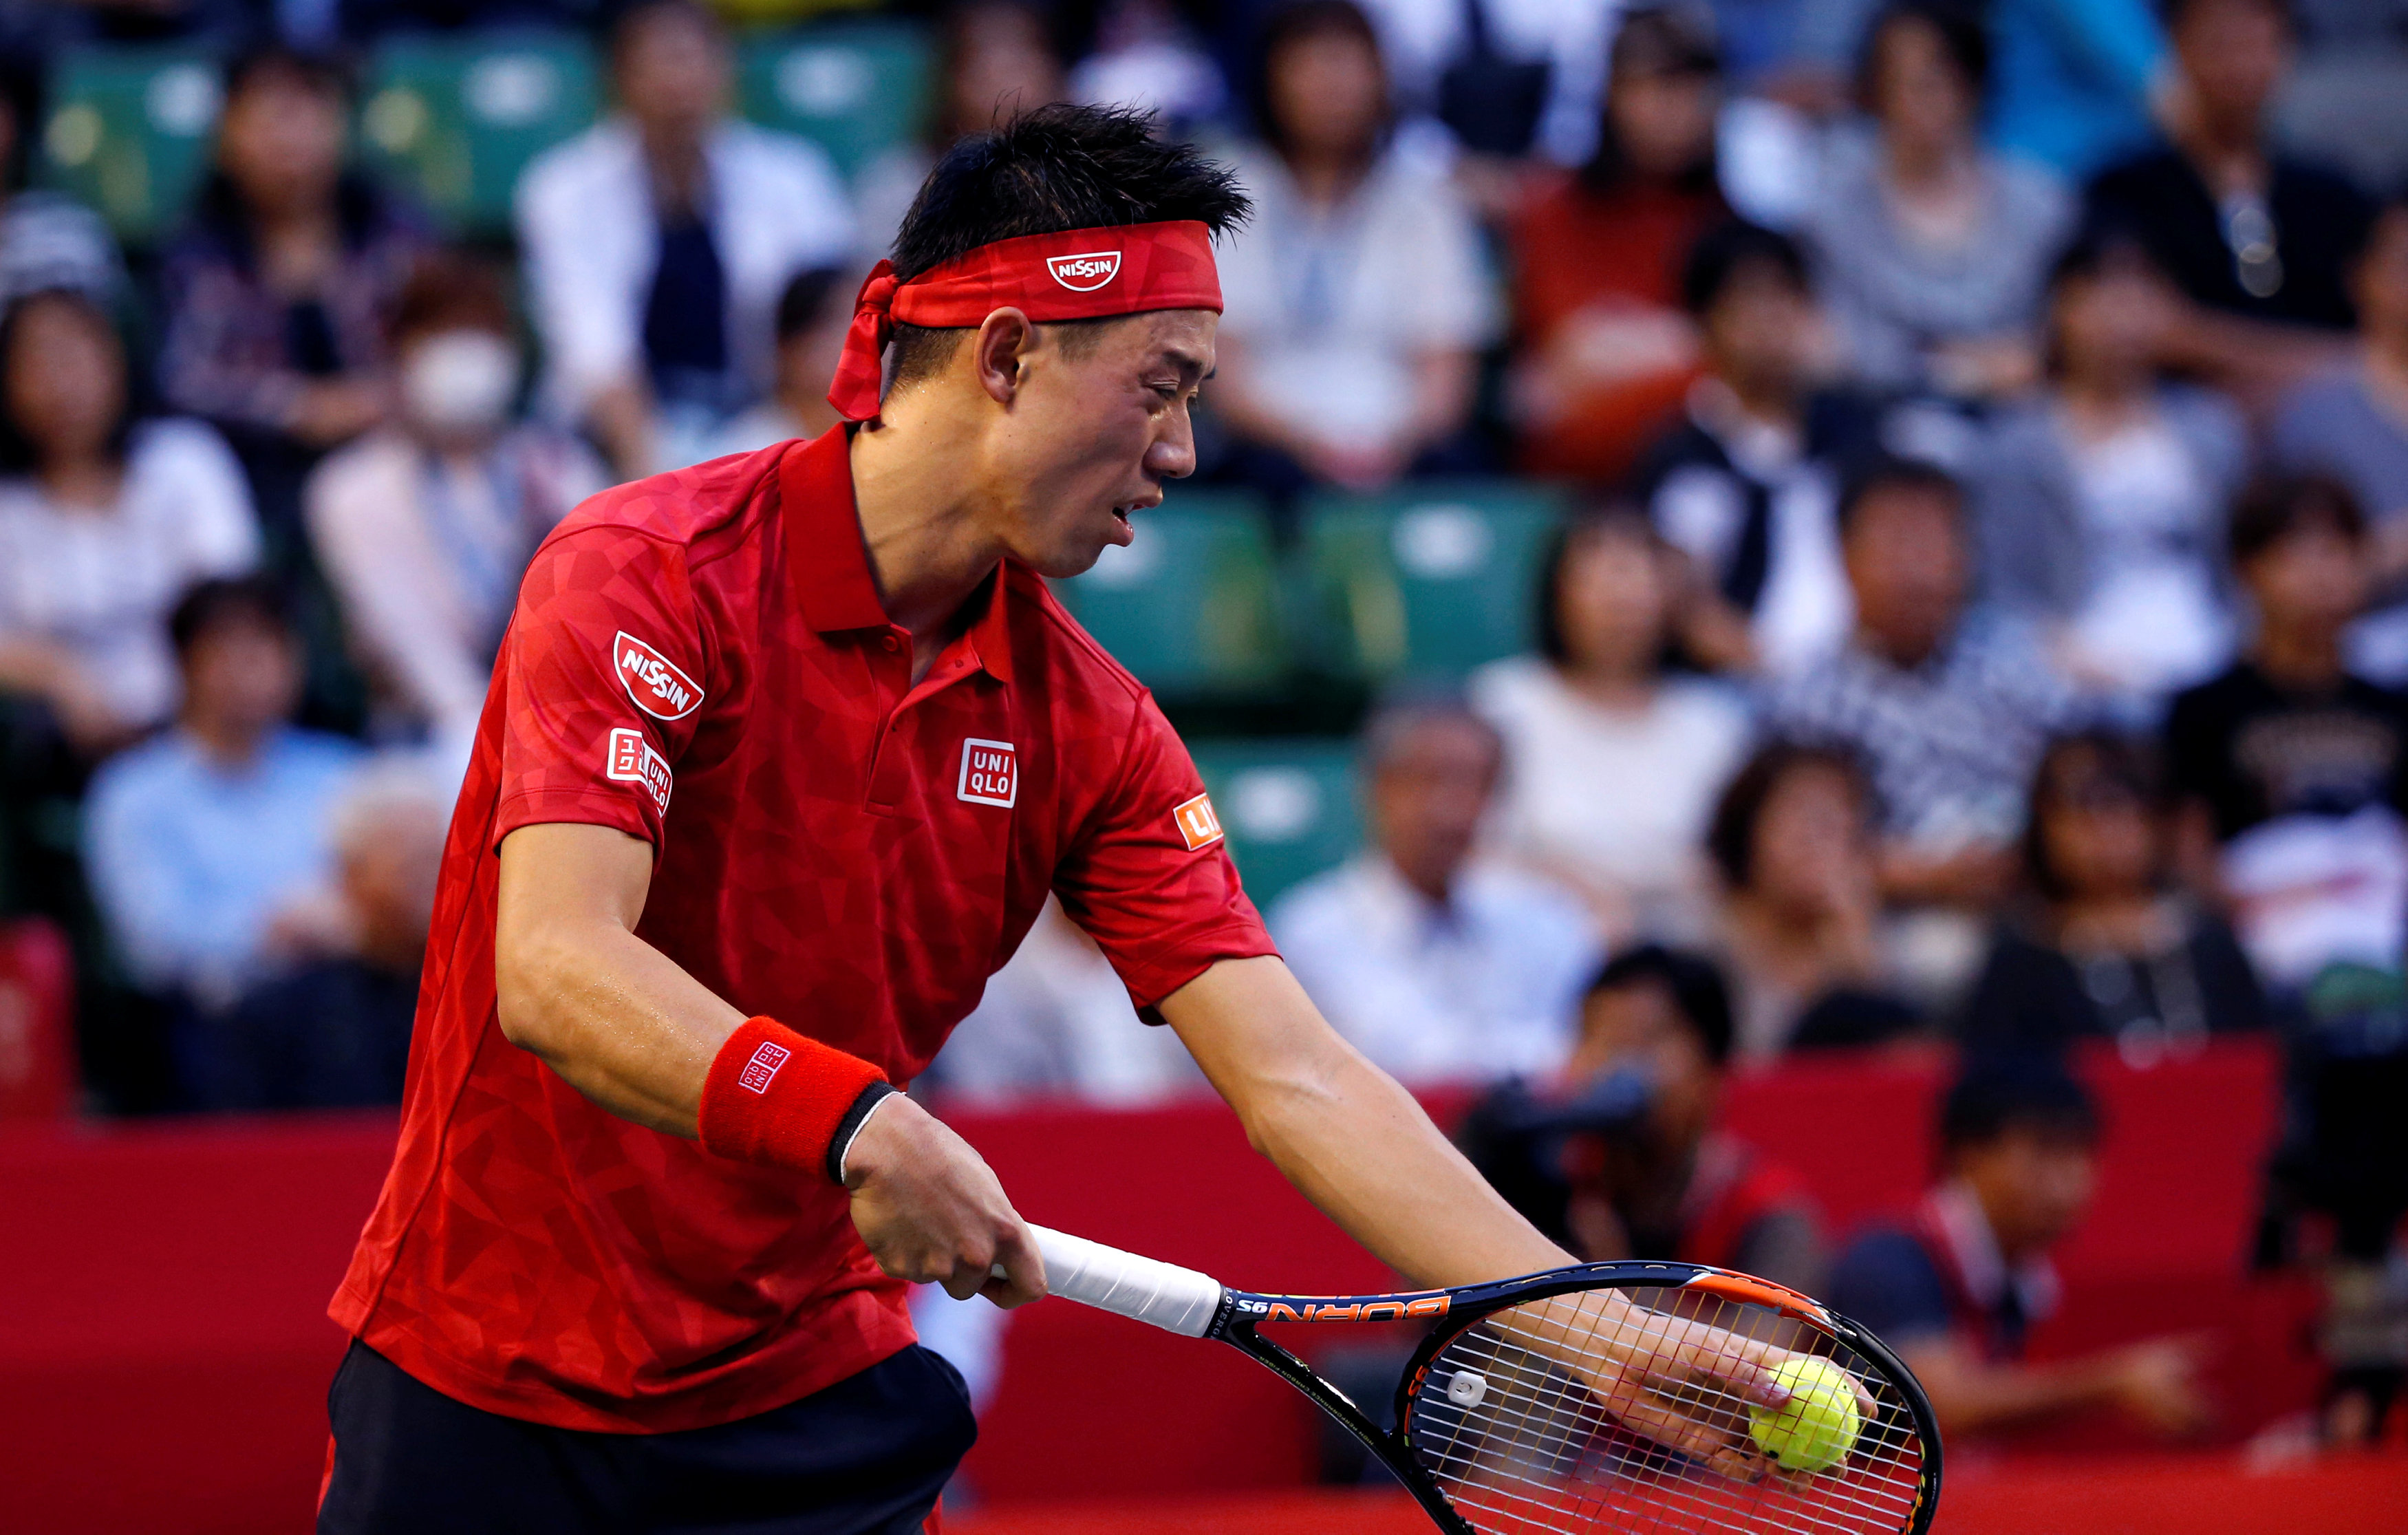 Nishikori qualifies for ATP Tour finals